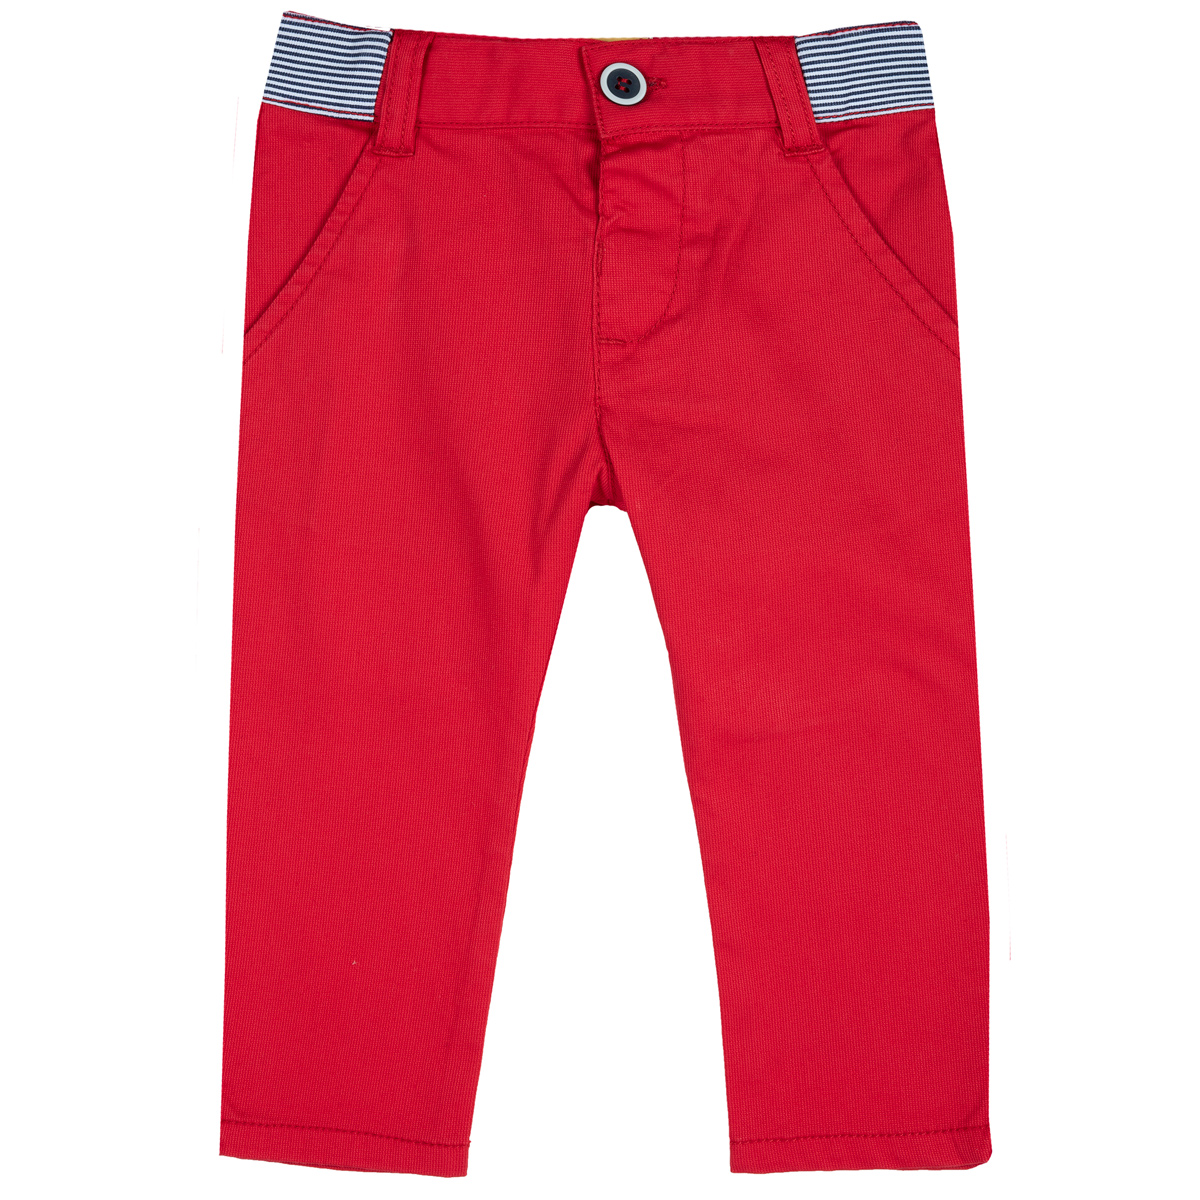 Pantalon lung copii Chicco, elastic, rosu, 08151